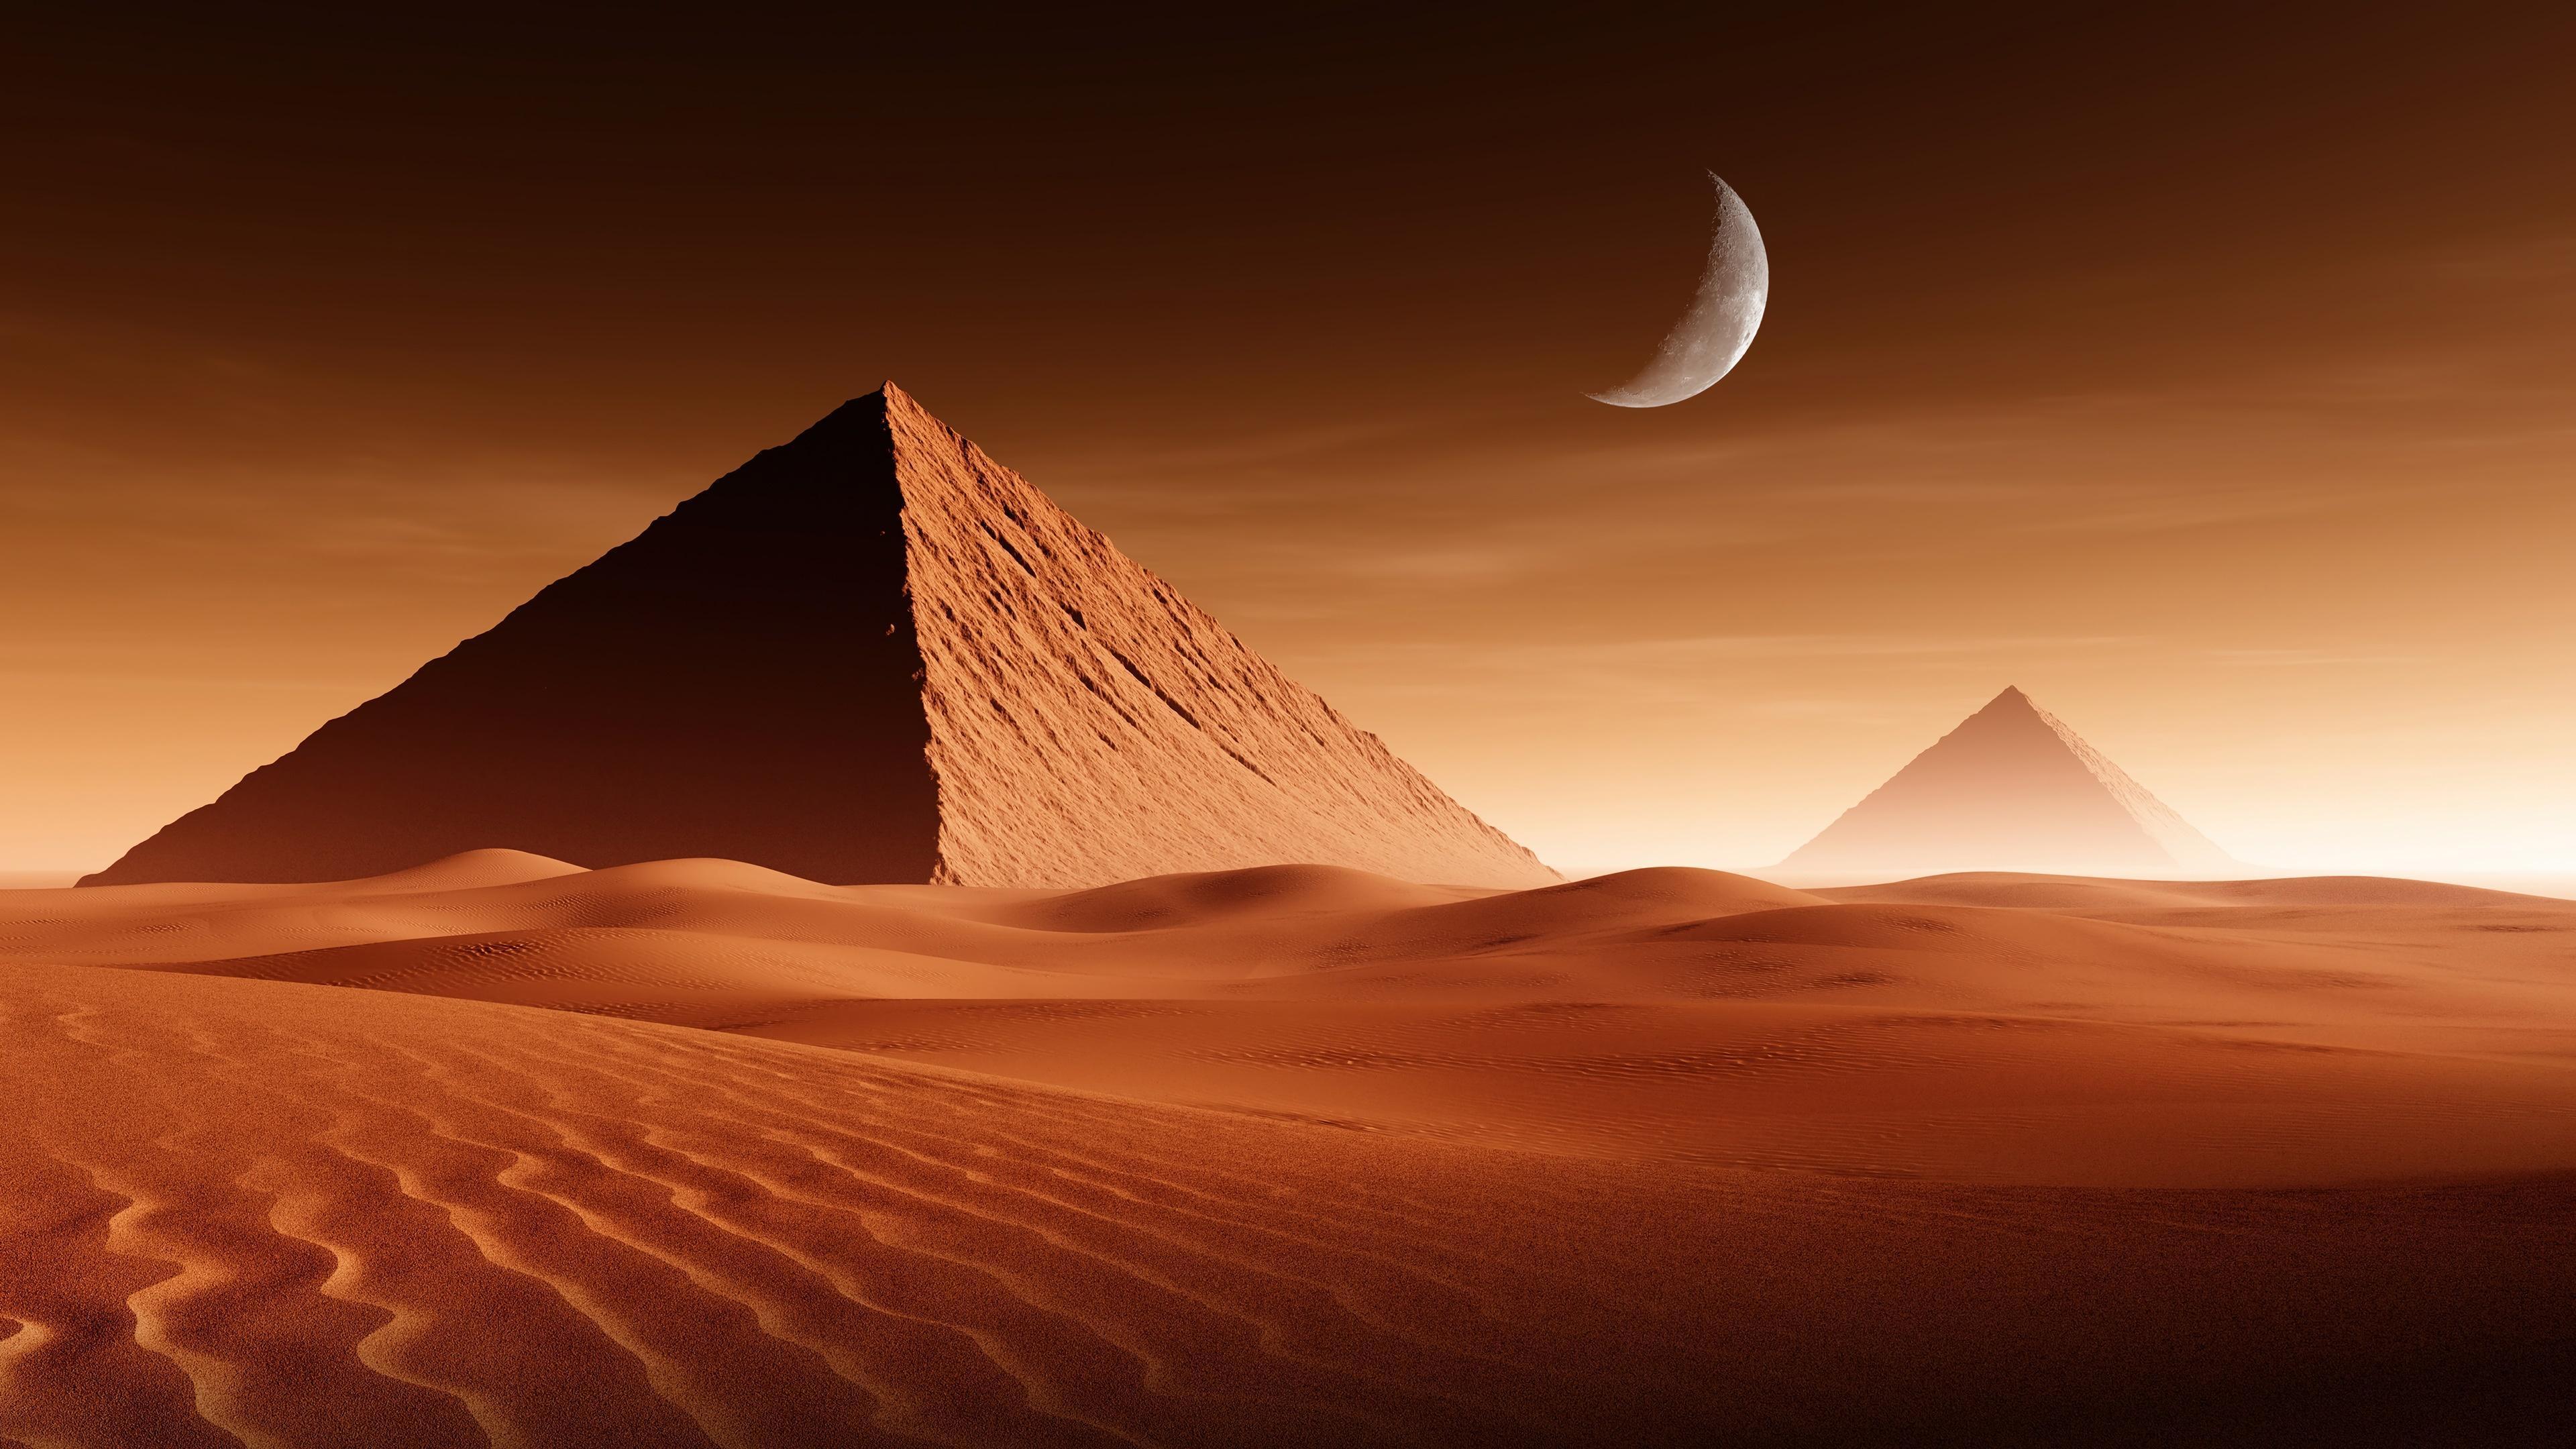 HD wallpaper, Desert, 4K, Scenery, Night, Moon, Pyramid